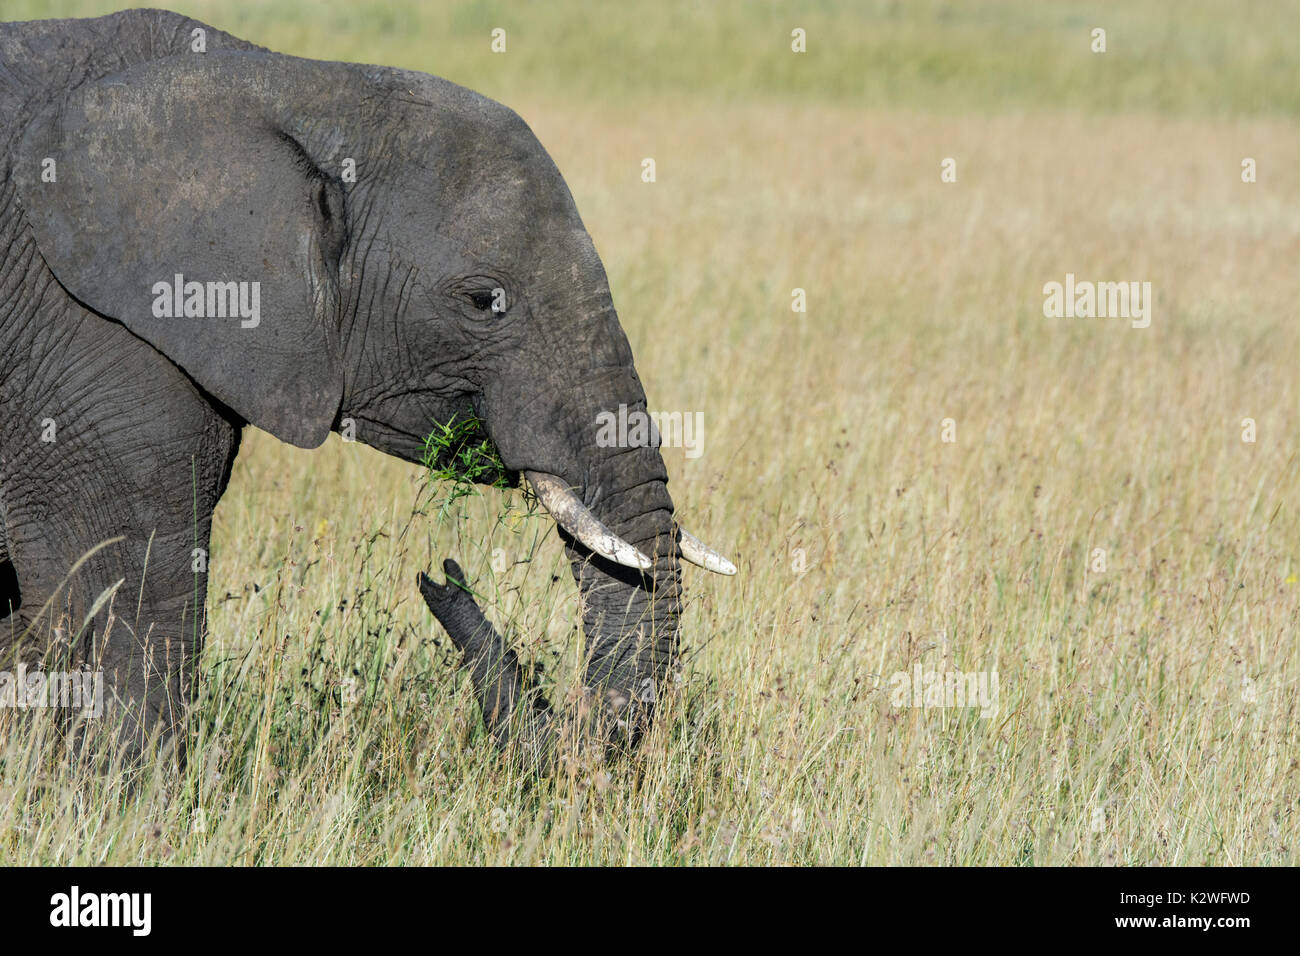 Vista laterale di un lone Elefante africano Loxodonta africana,mangiare erba, il Masai Mara riserva nazionale, Kenya, Africa orientale Foto Stock